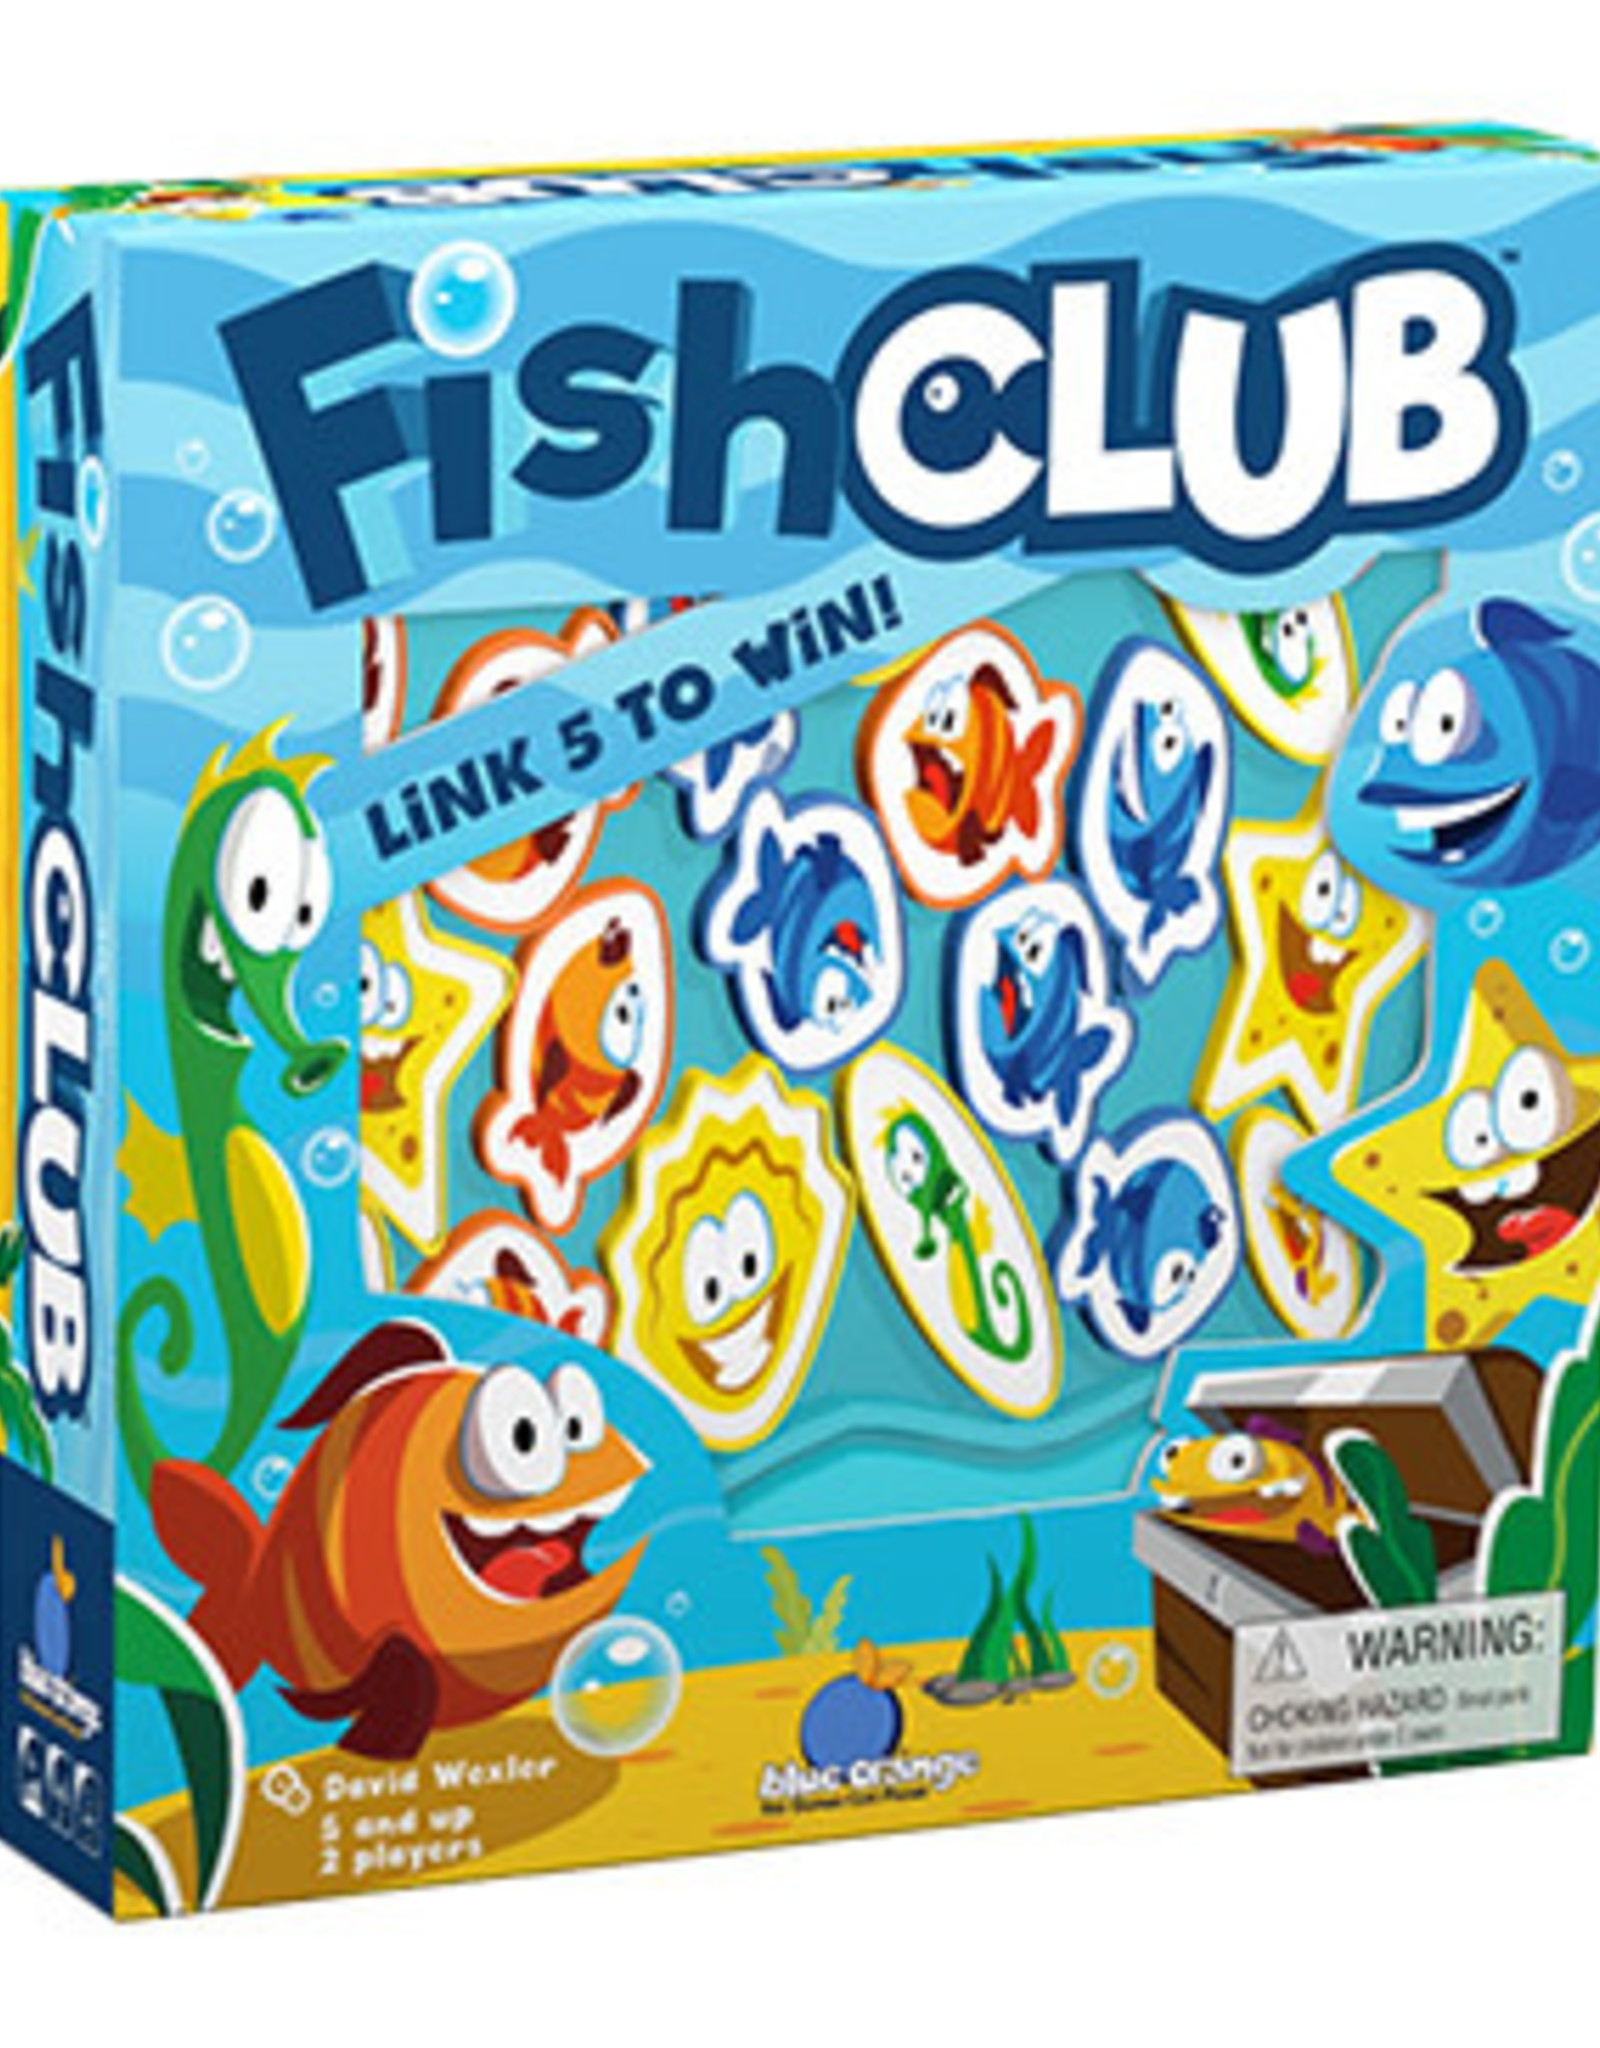 Fish Club Game